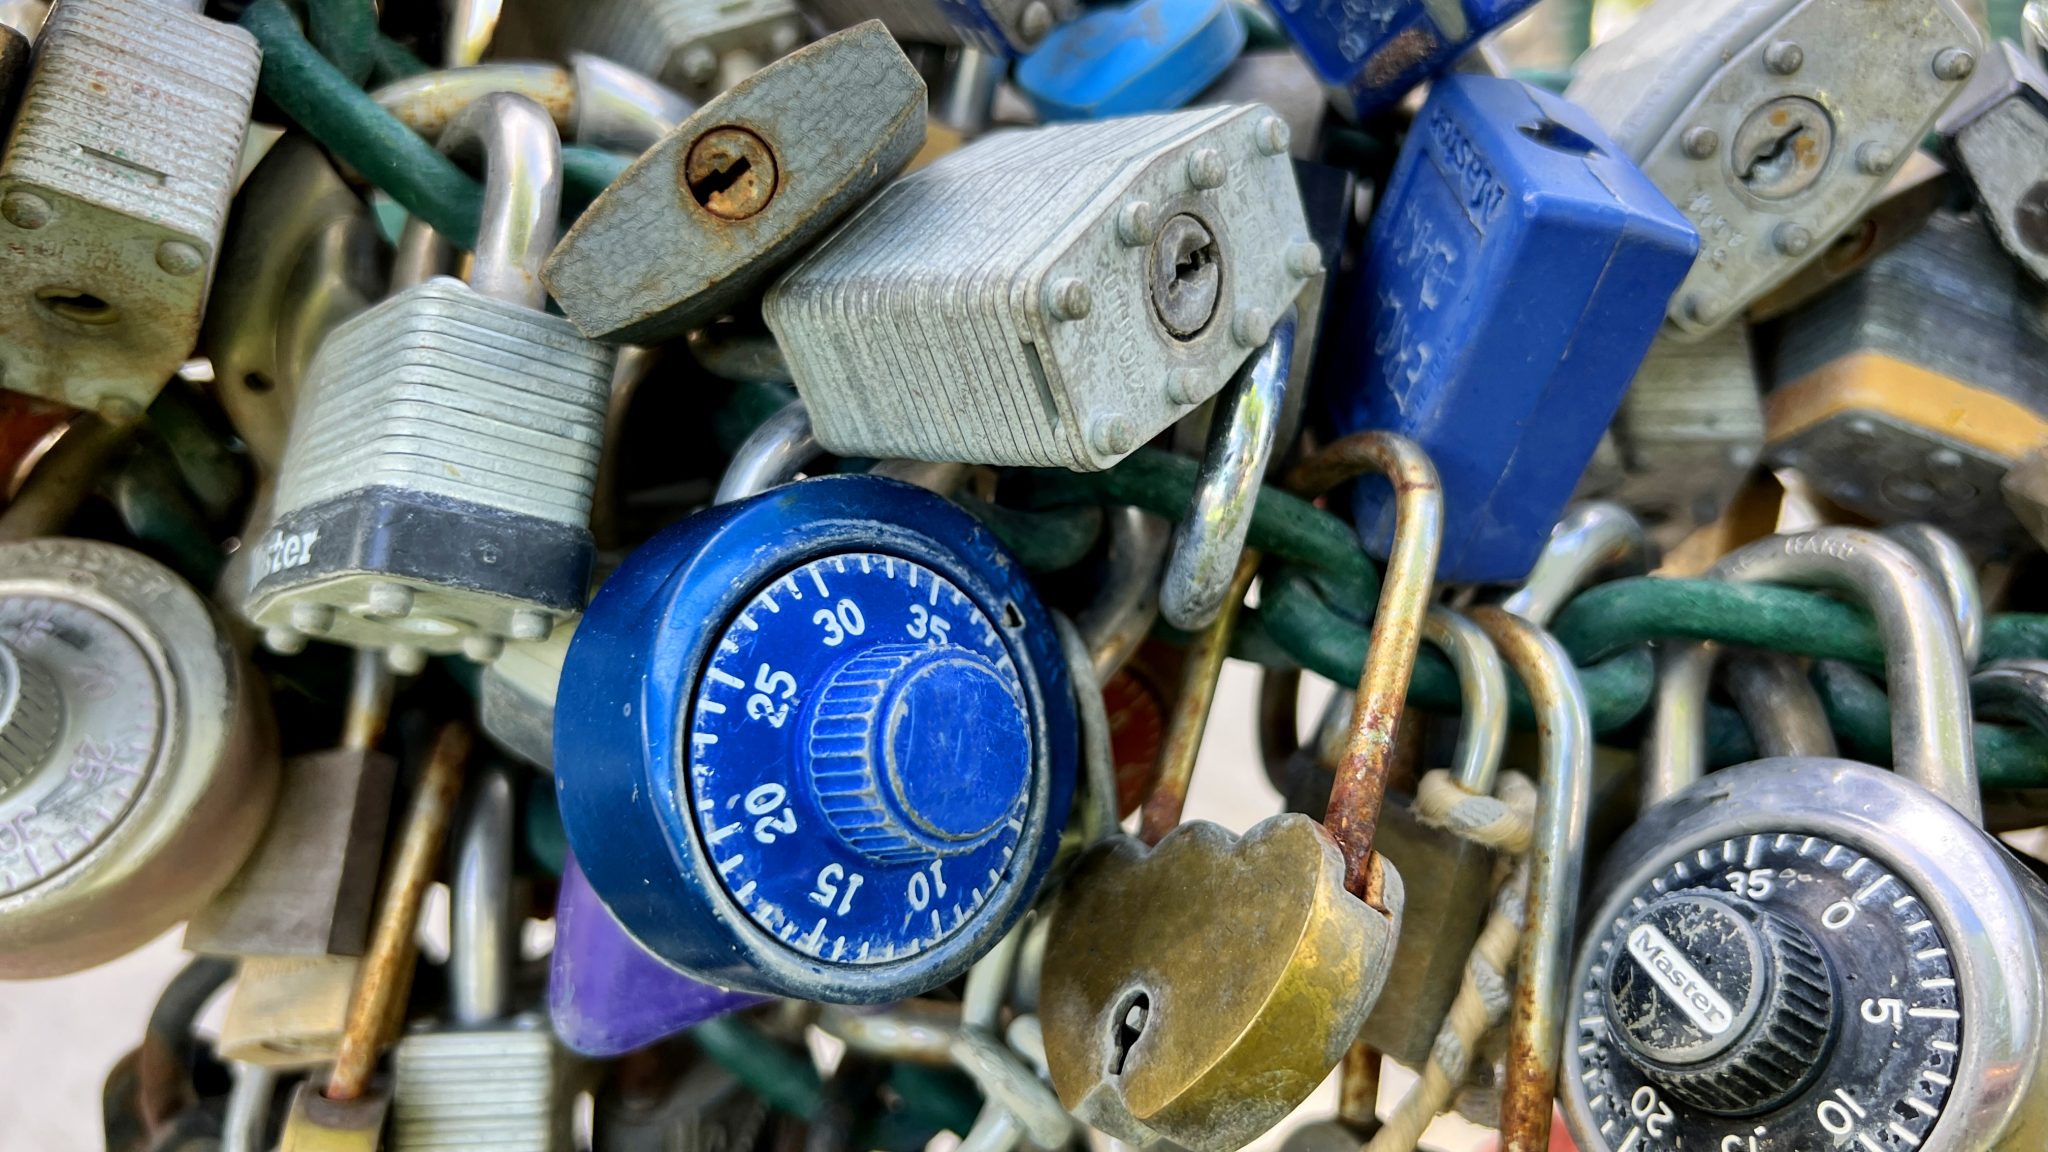 Lots of locks